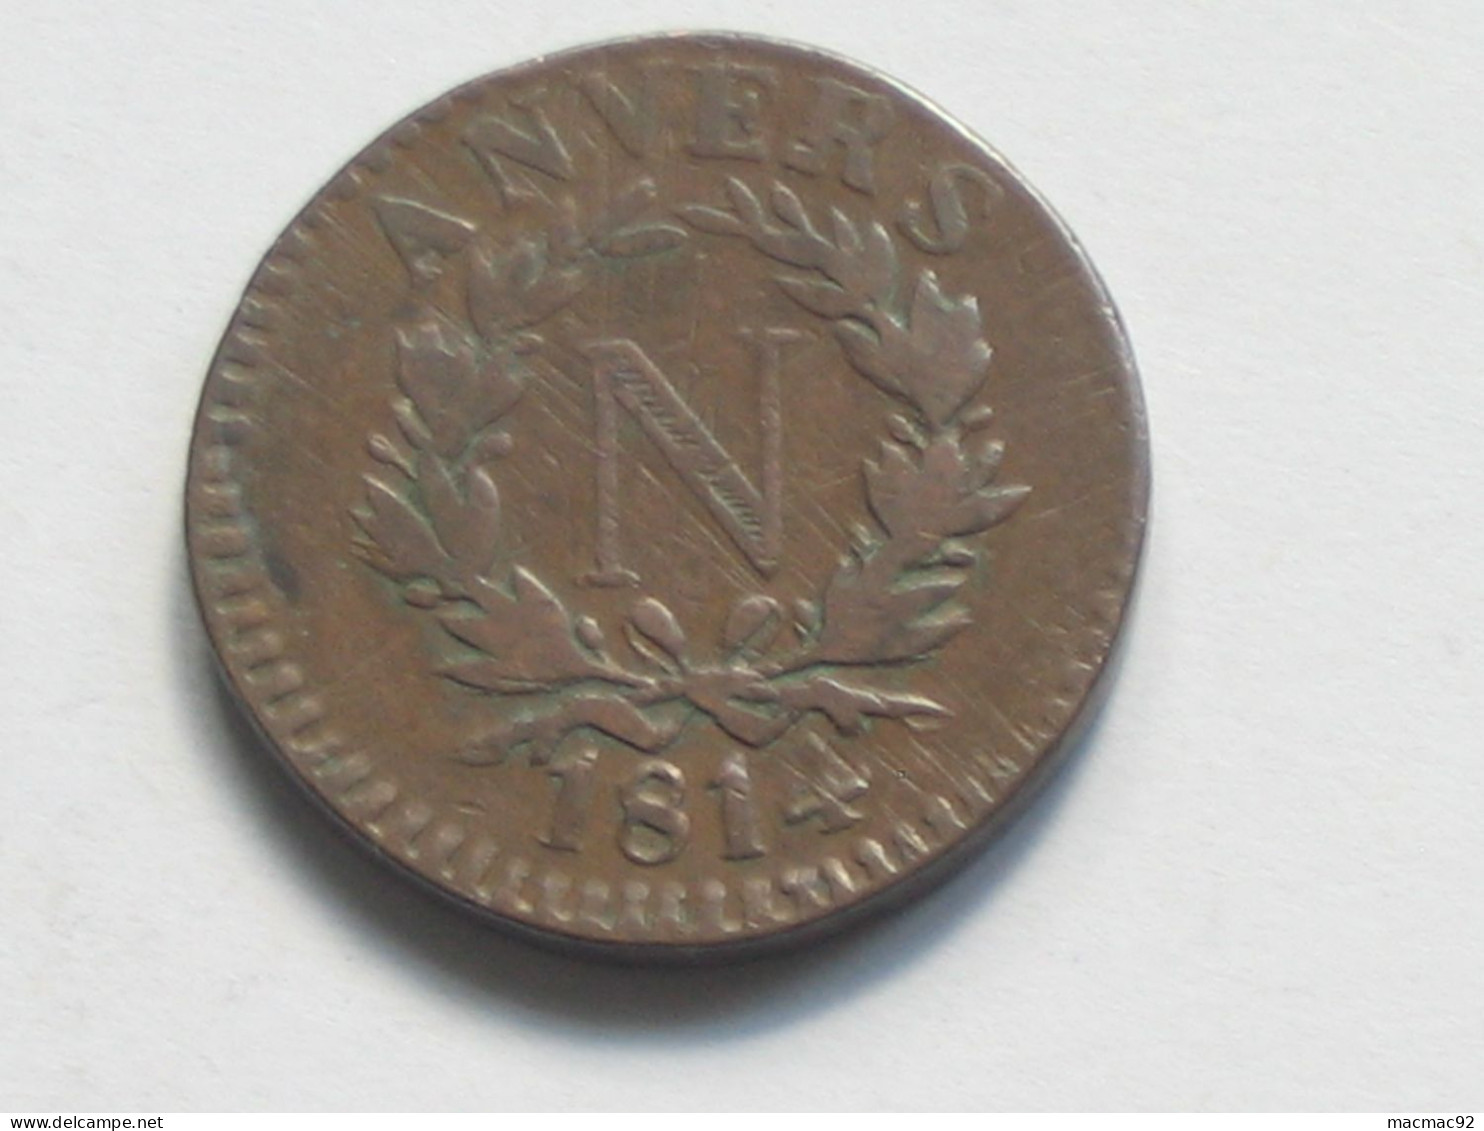 5 Centimes 1814  Siège D'ANVERS - Monnaie Obsidionale  **** EN ACHAT IMMEDIAT **** Monnaie  RARE !!!! - 1814 Asedio De Amberes